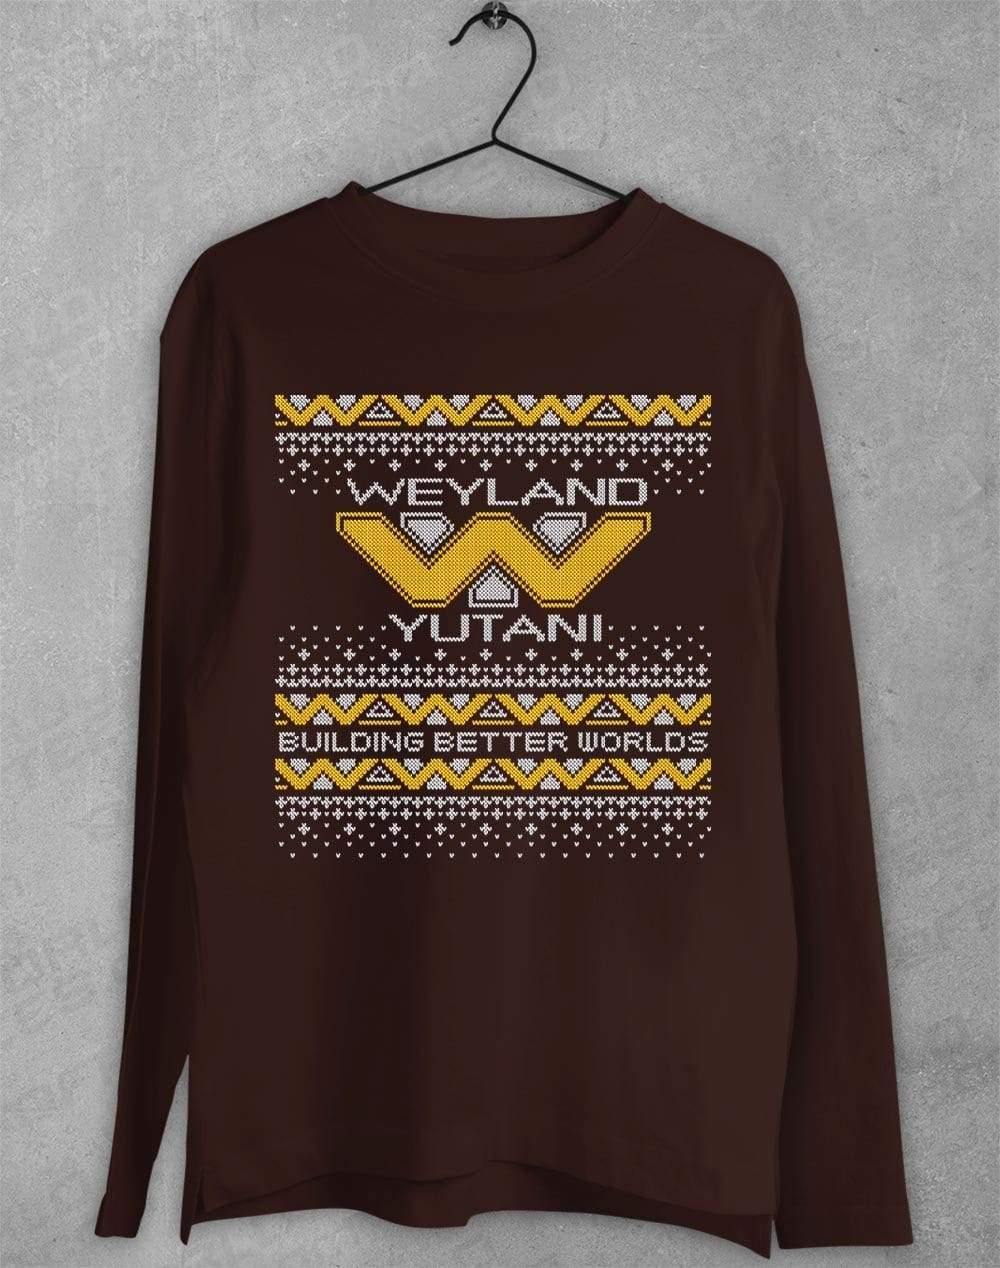 Weyland Yutani Festive Knitted-Look Long Sleeve T-Shirt S / Dark Chocolate  - Off World Tees